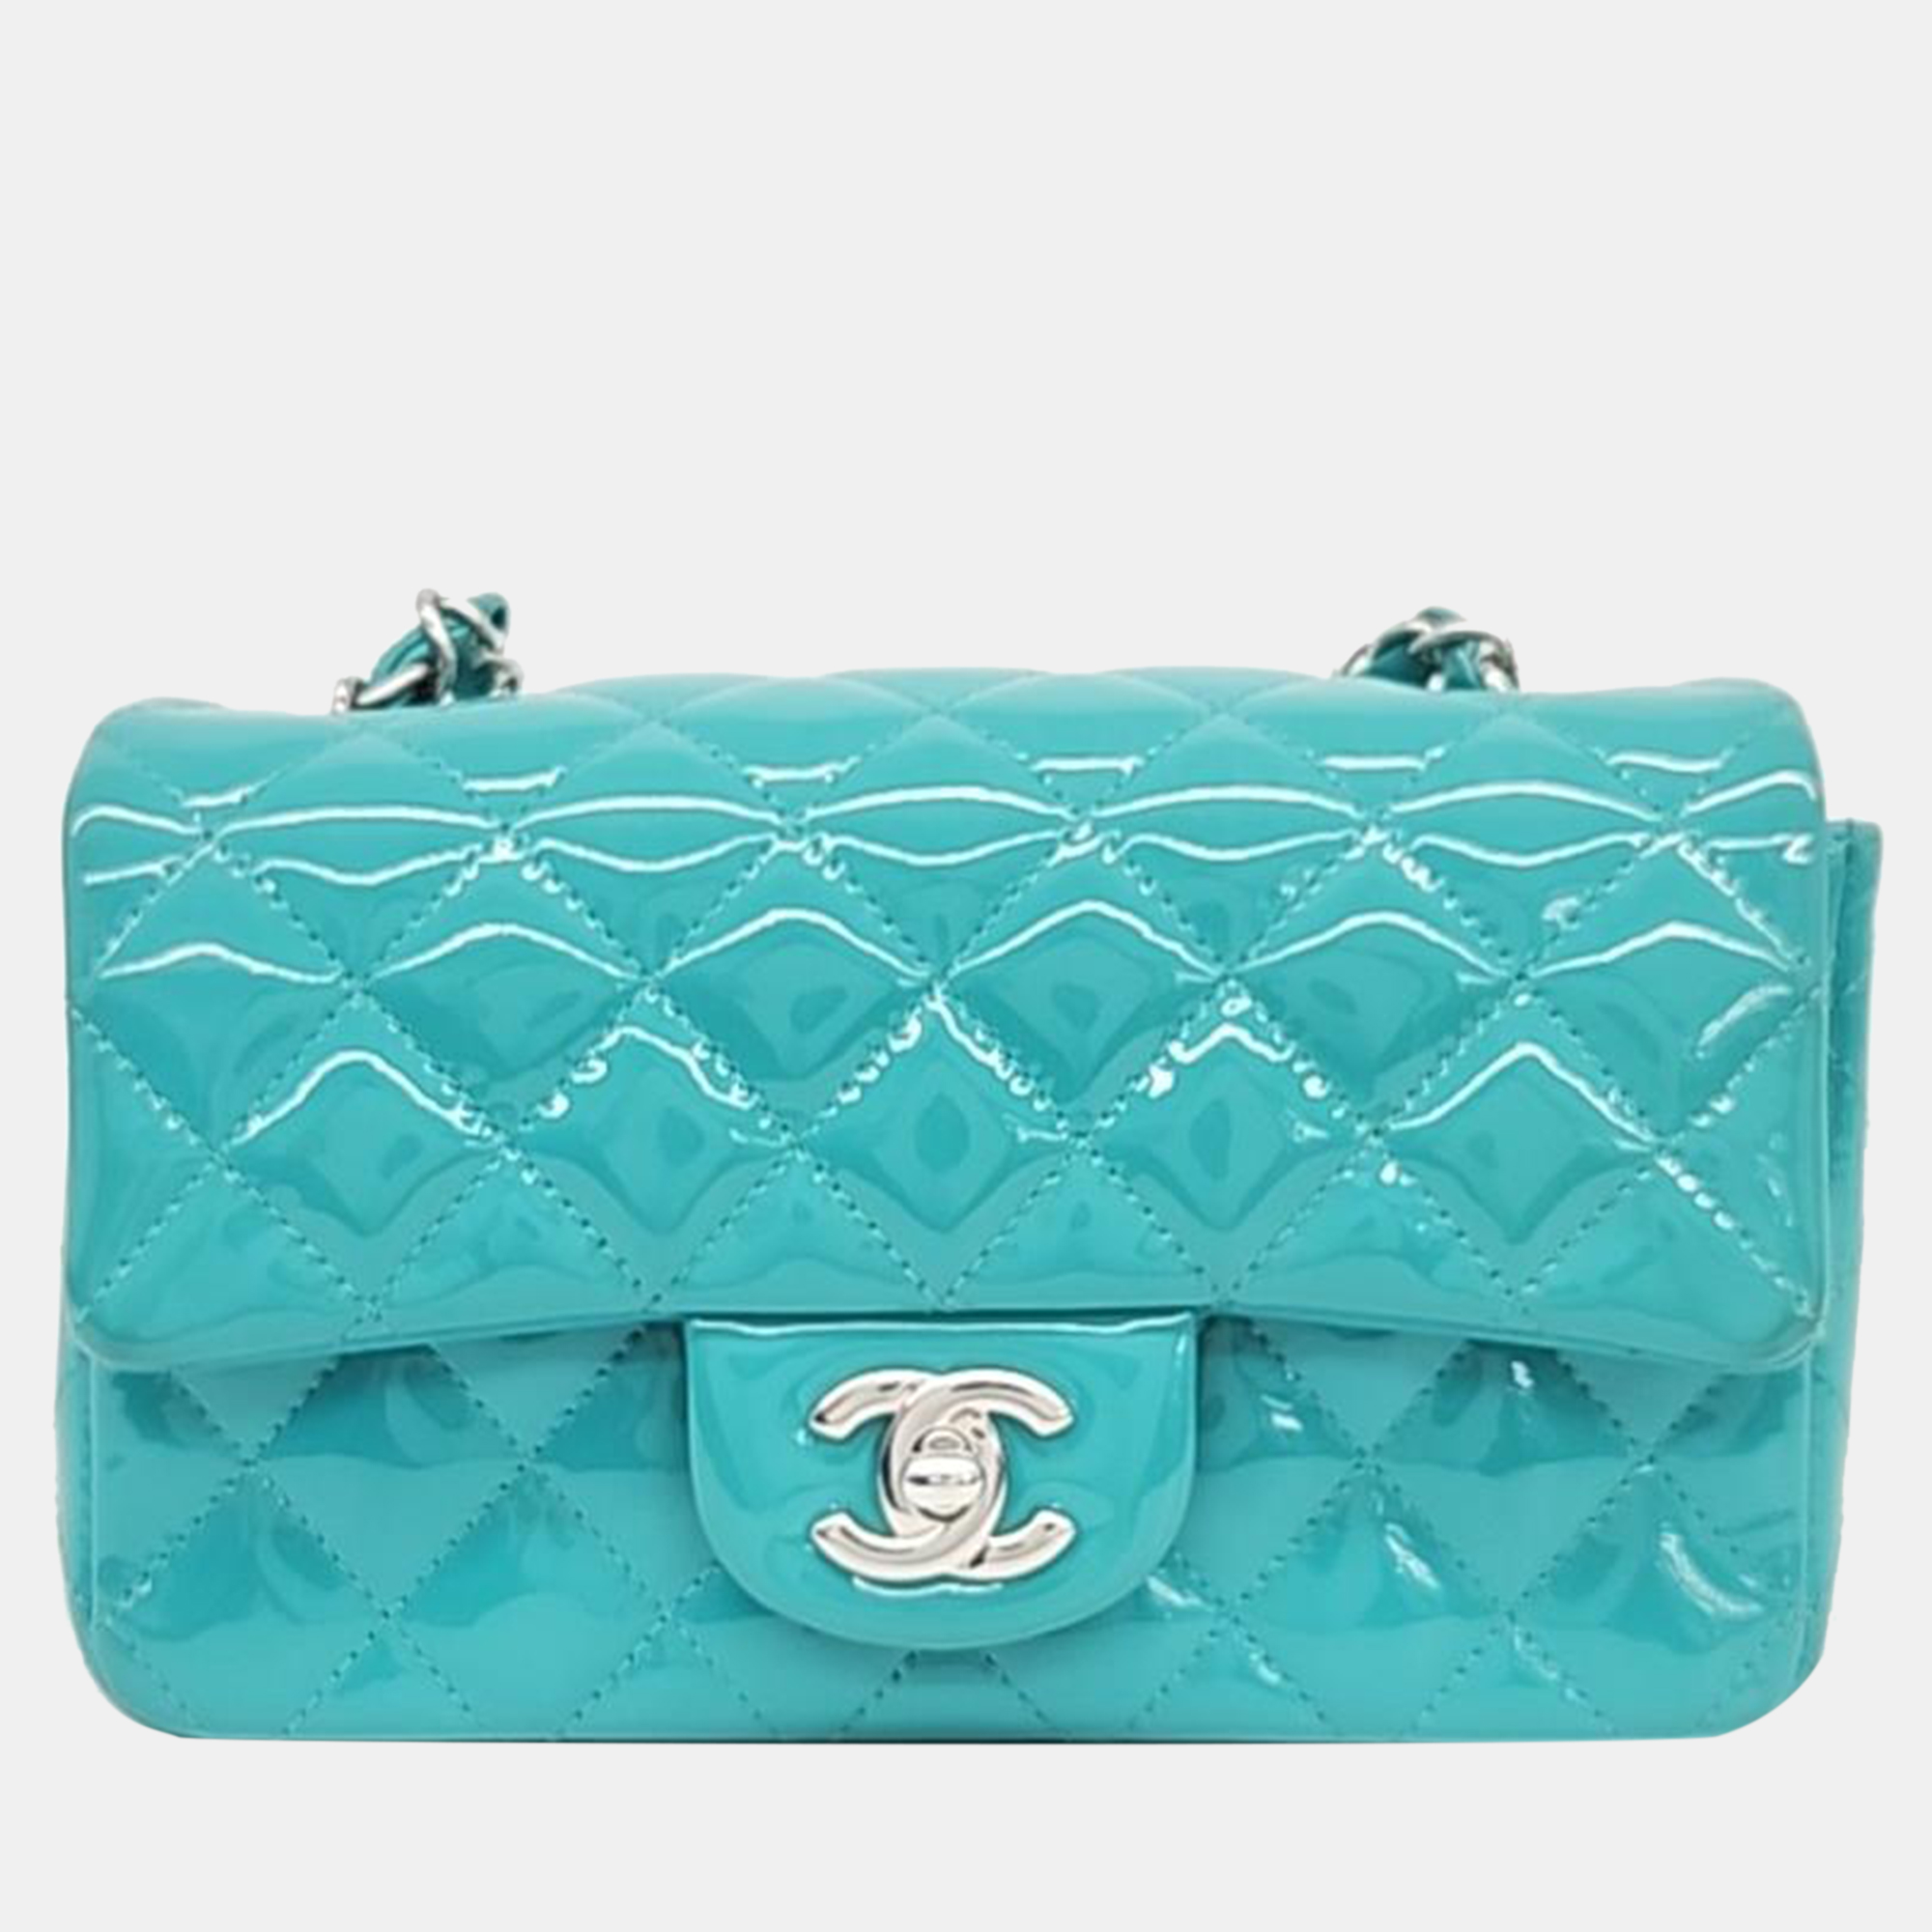 Chanel blue patent leather rectangular mini flap bag